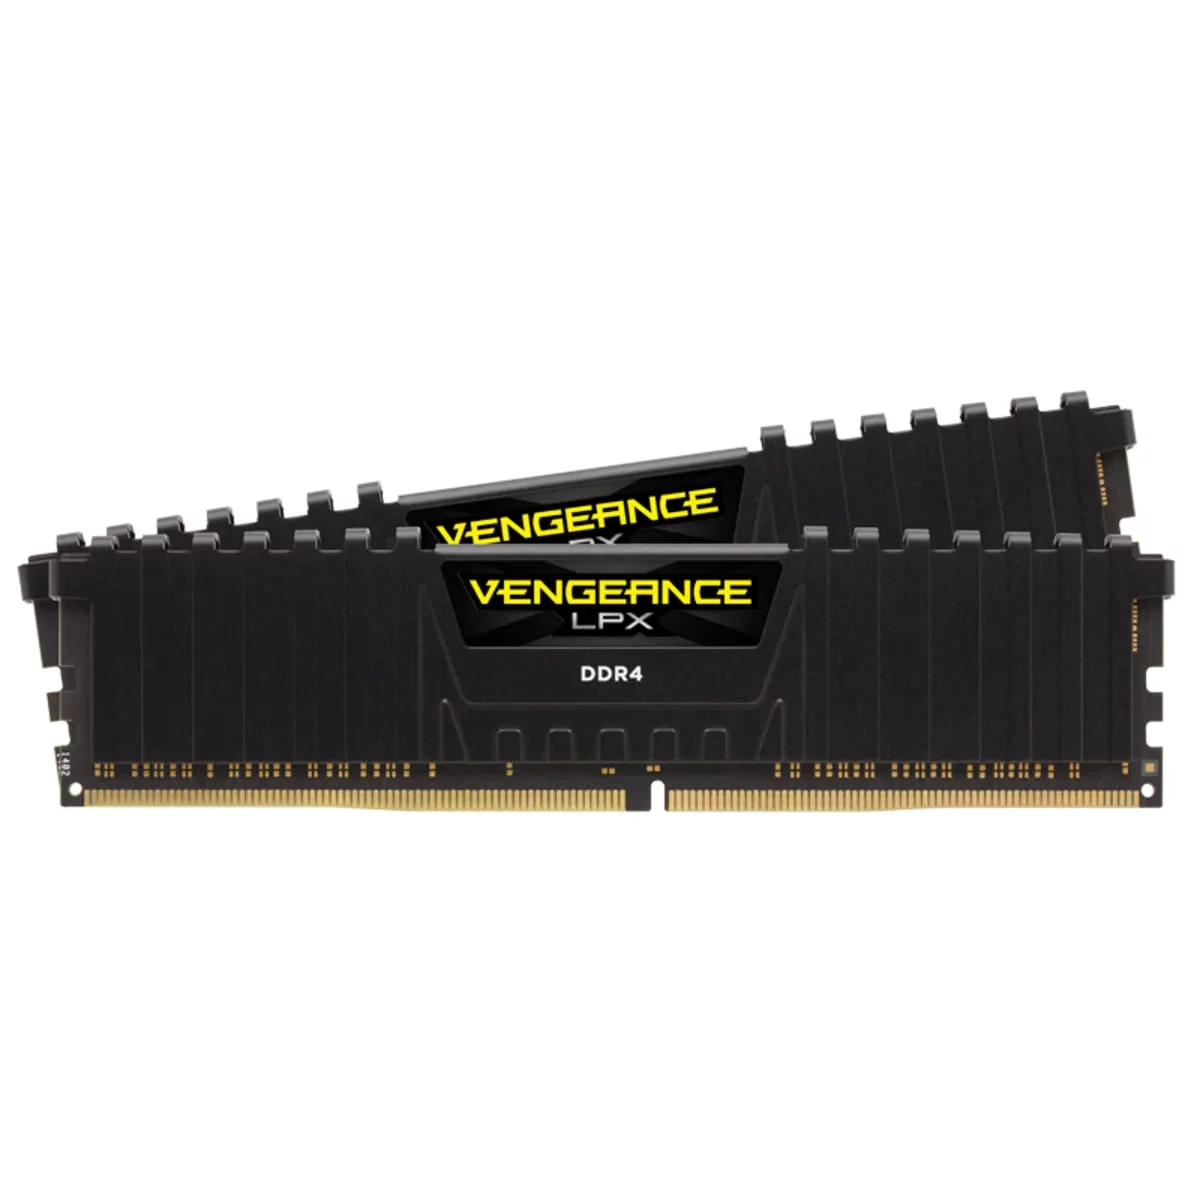 RAM CORSAIR VENGEANCE LPX 32GB (2x16GB) DDR4 3000MHz - CMK32GX4M2D3000C16 - songphuong.vn